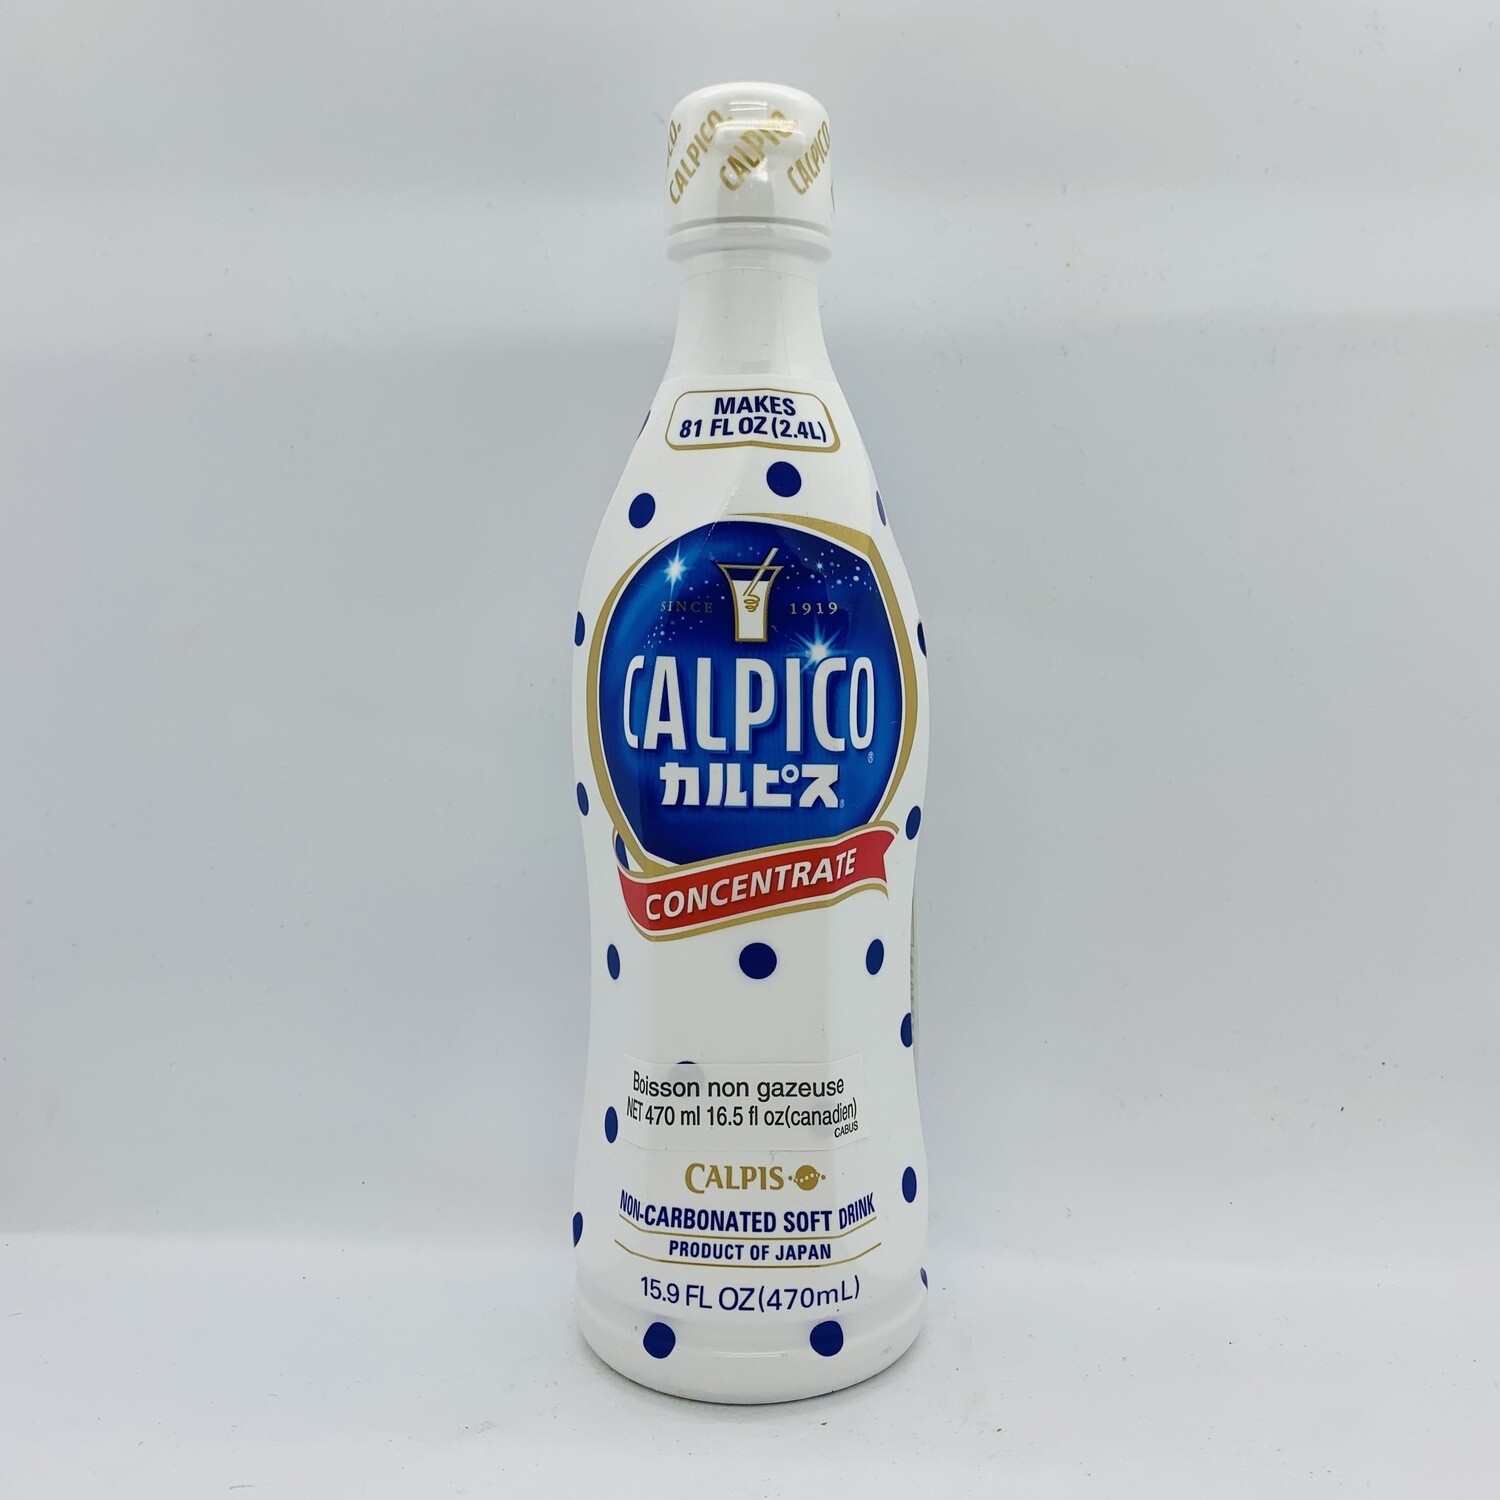 Calpico Consentrate bottle 470ml